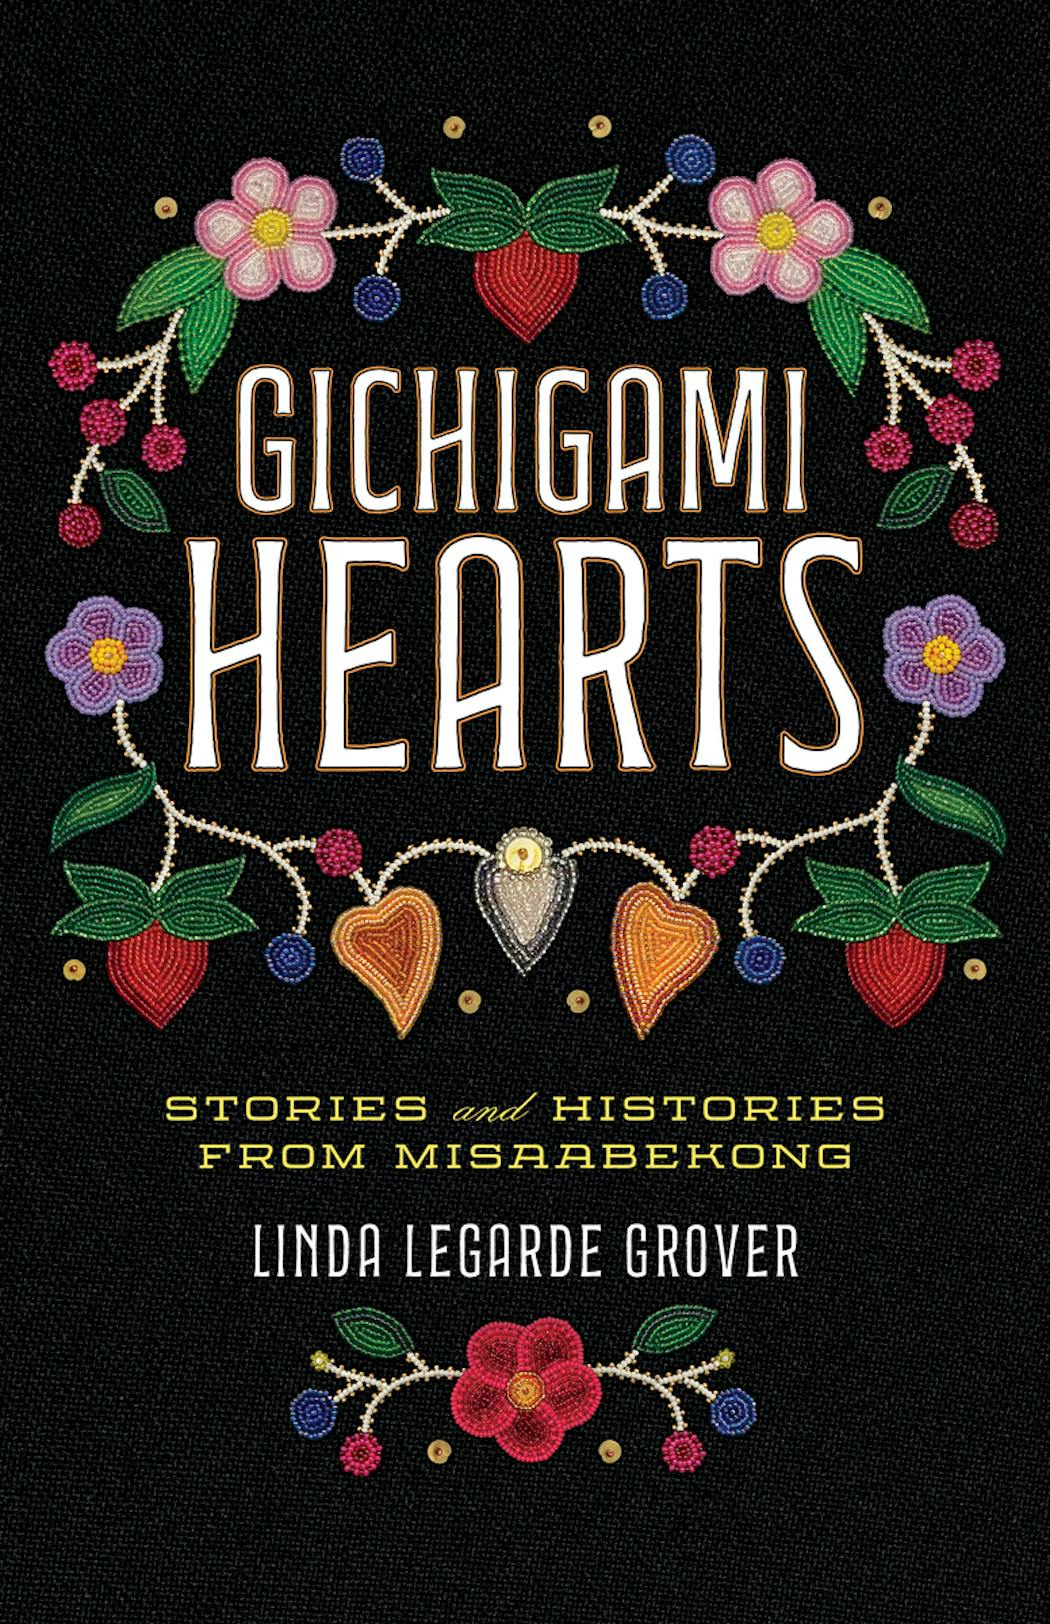 “Gichigami Hearts” by Linda LeGarde Grover